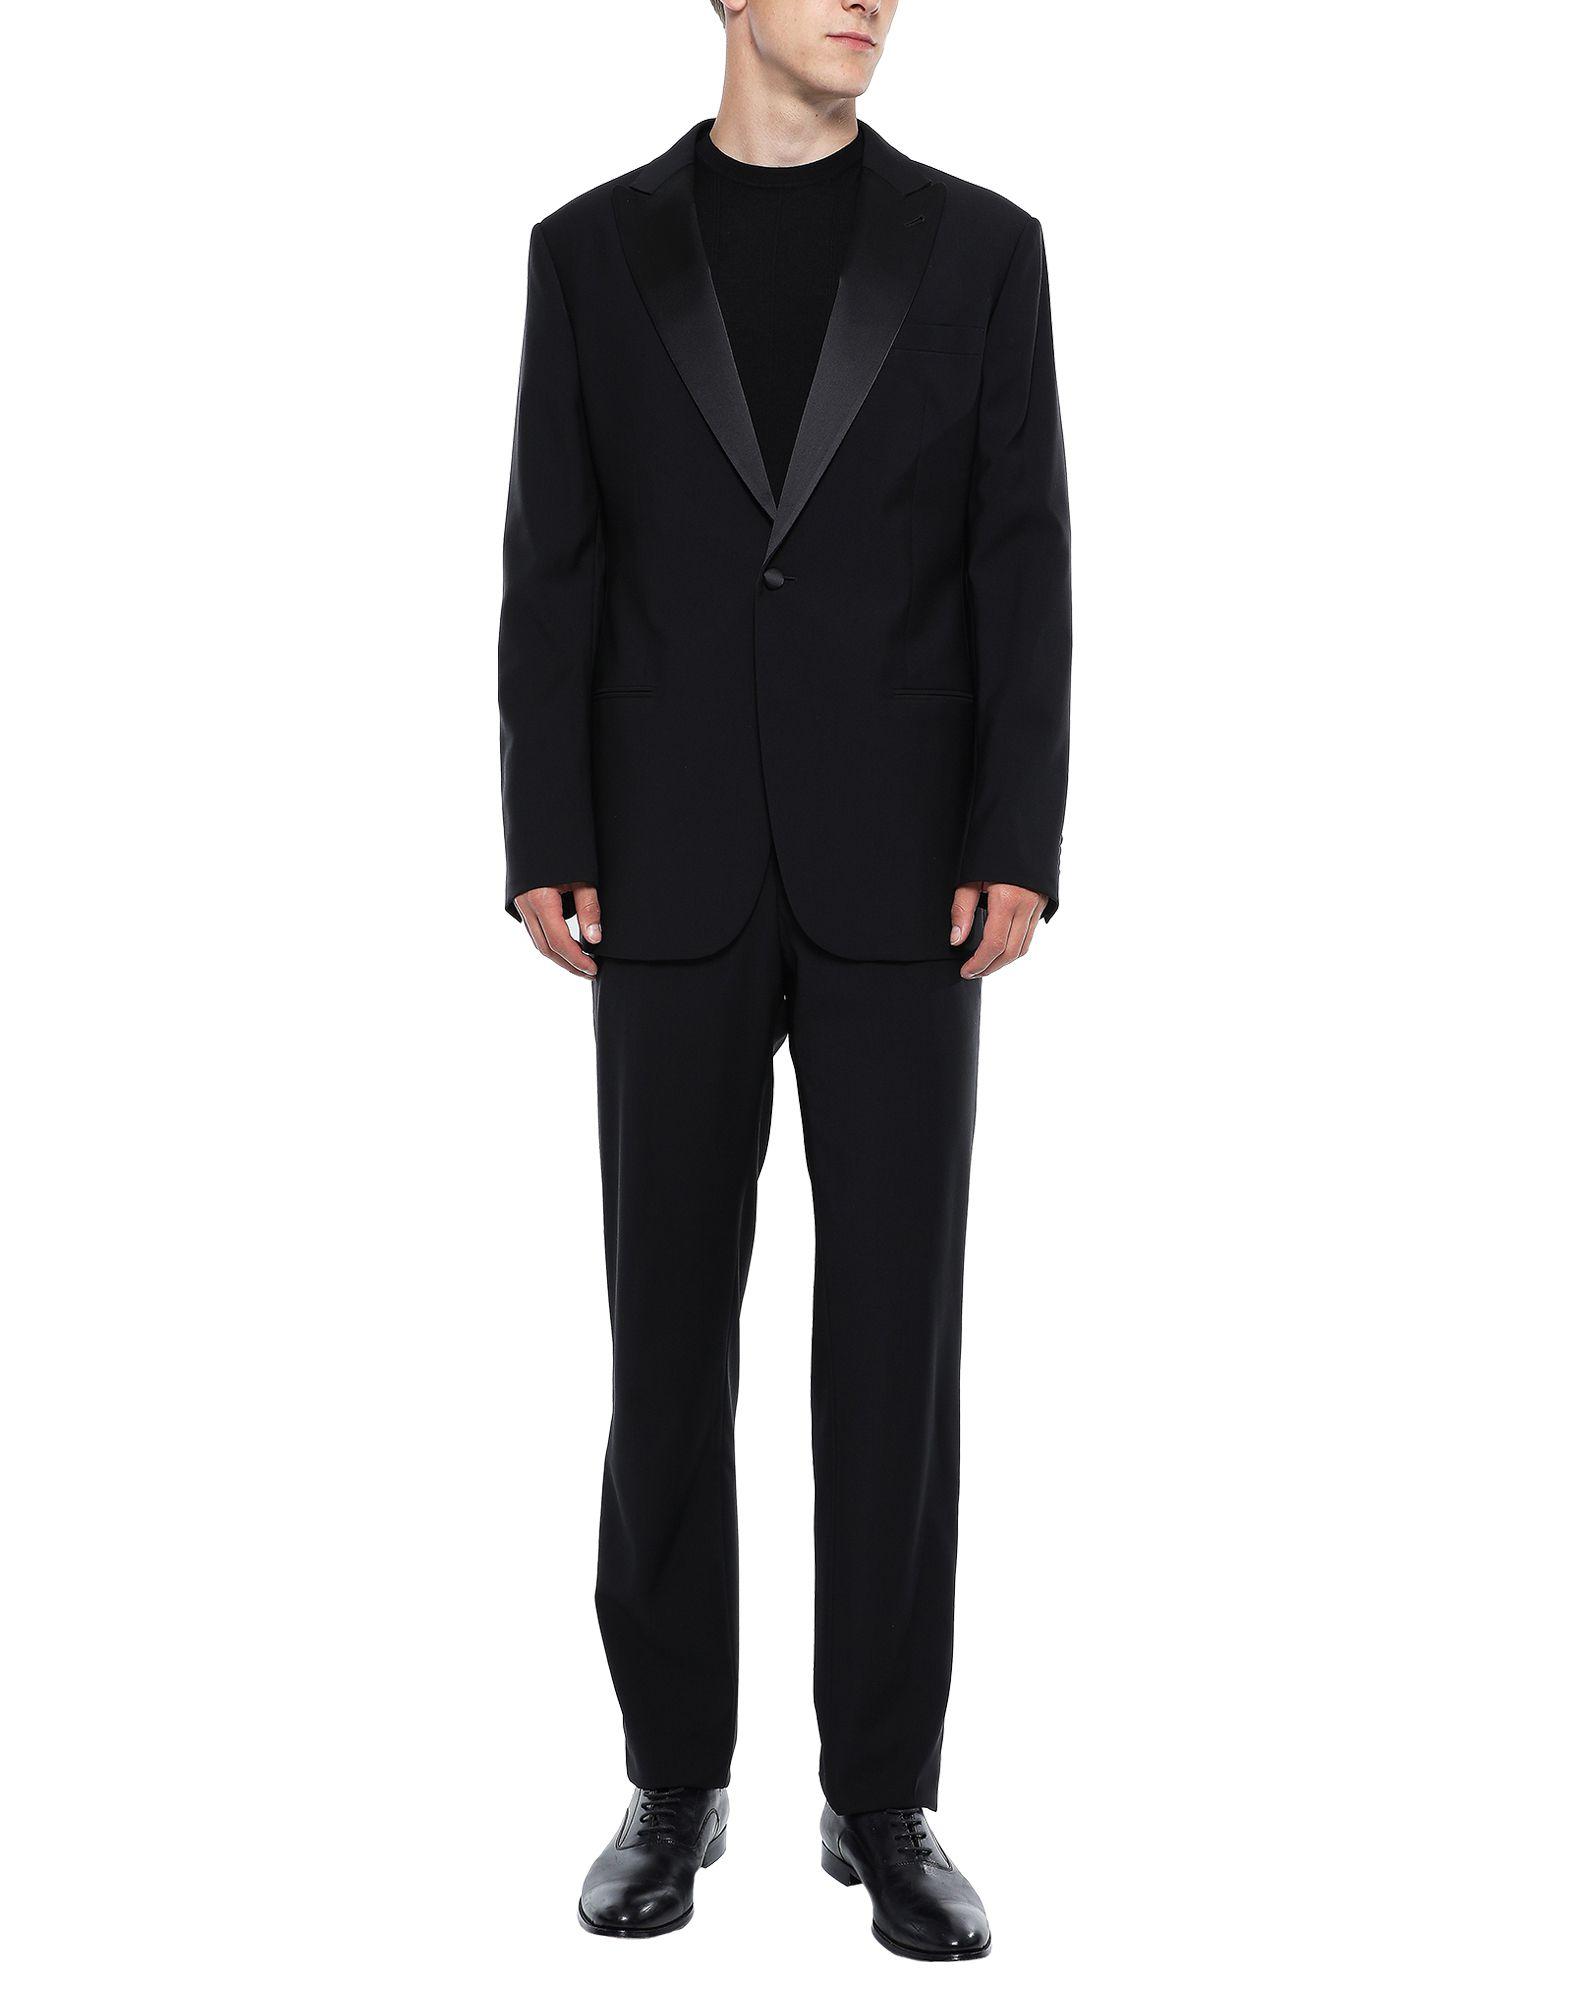 Giorgio Armani Satin Suit in Black for Men - Lyst